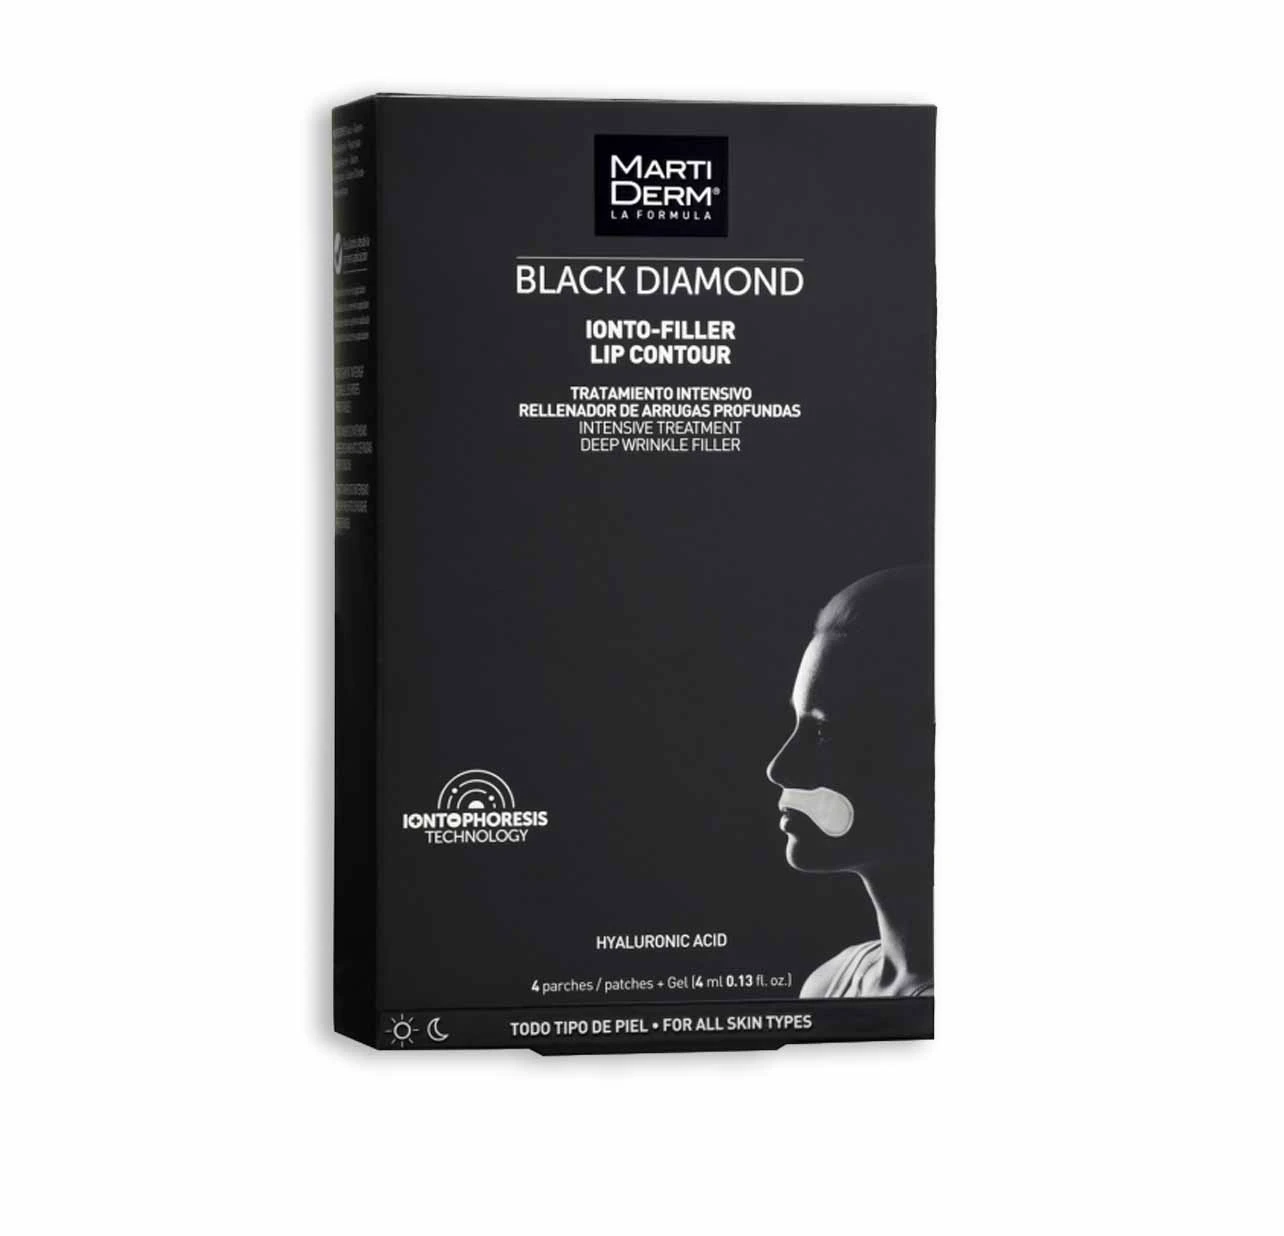 MartiDerm Black Diamond Ionto-Filler Lip Contour